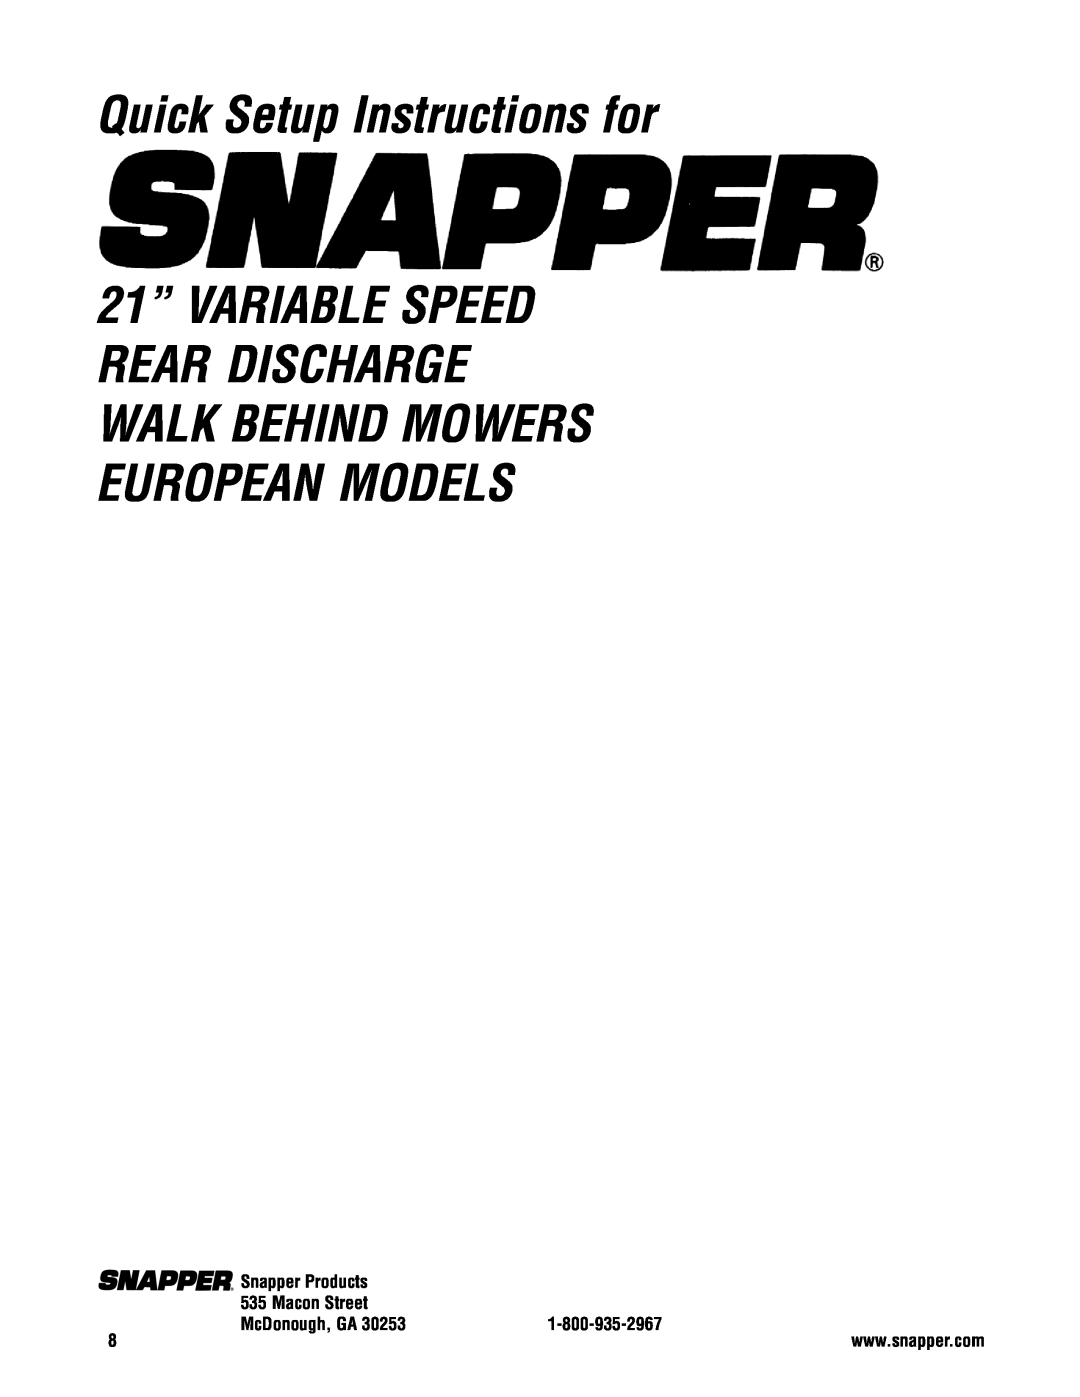 Snapper ESPV21675 manual Quick Setup Instructions for, Snapper Products, Macon Street, McDonough, GA 